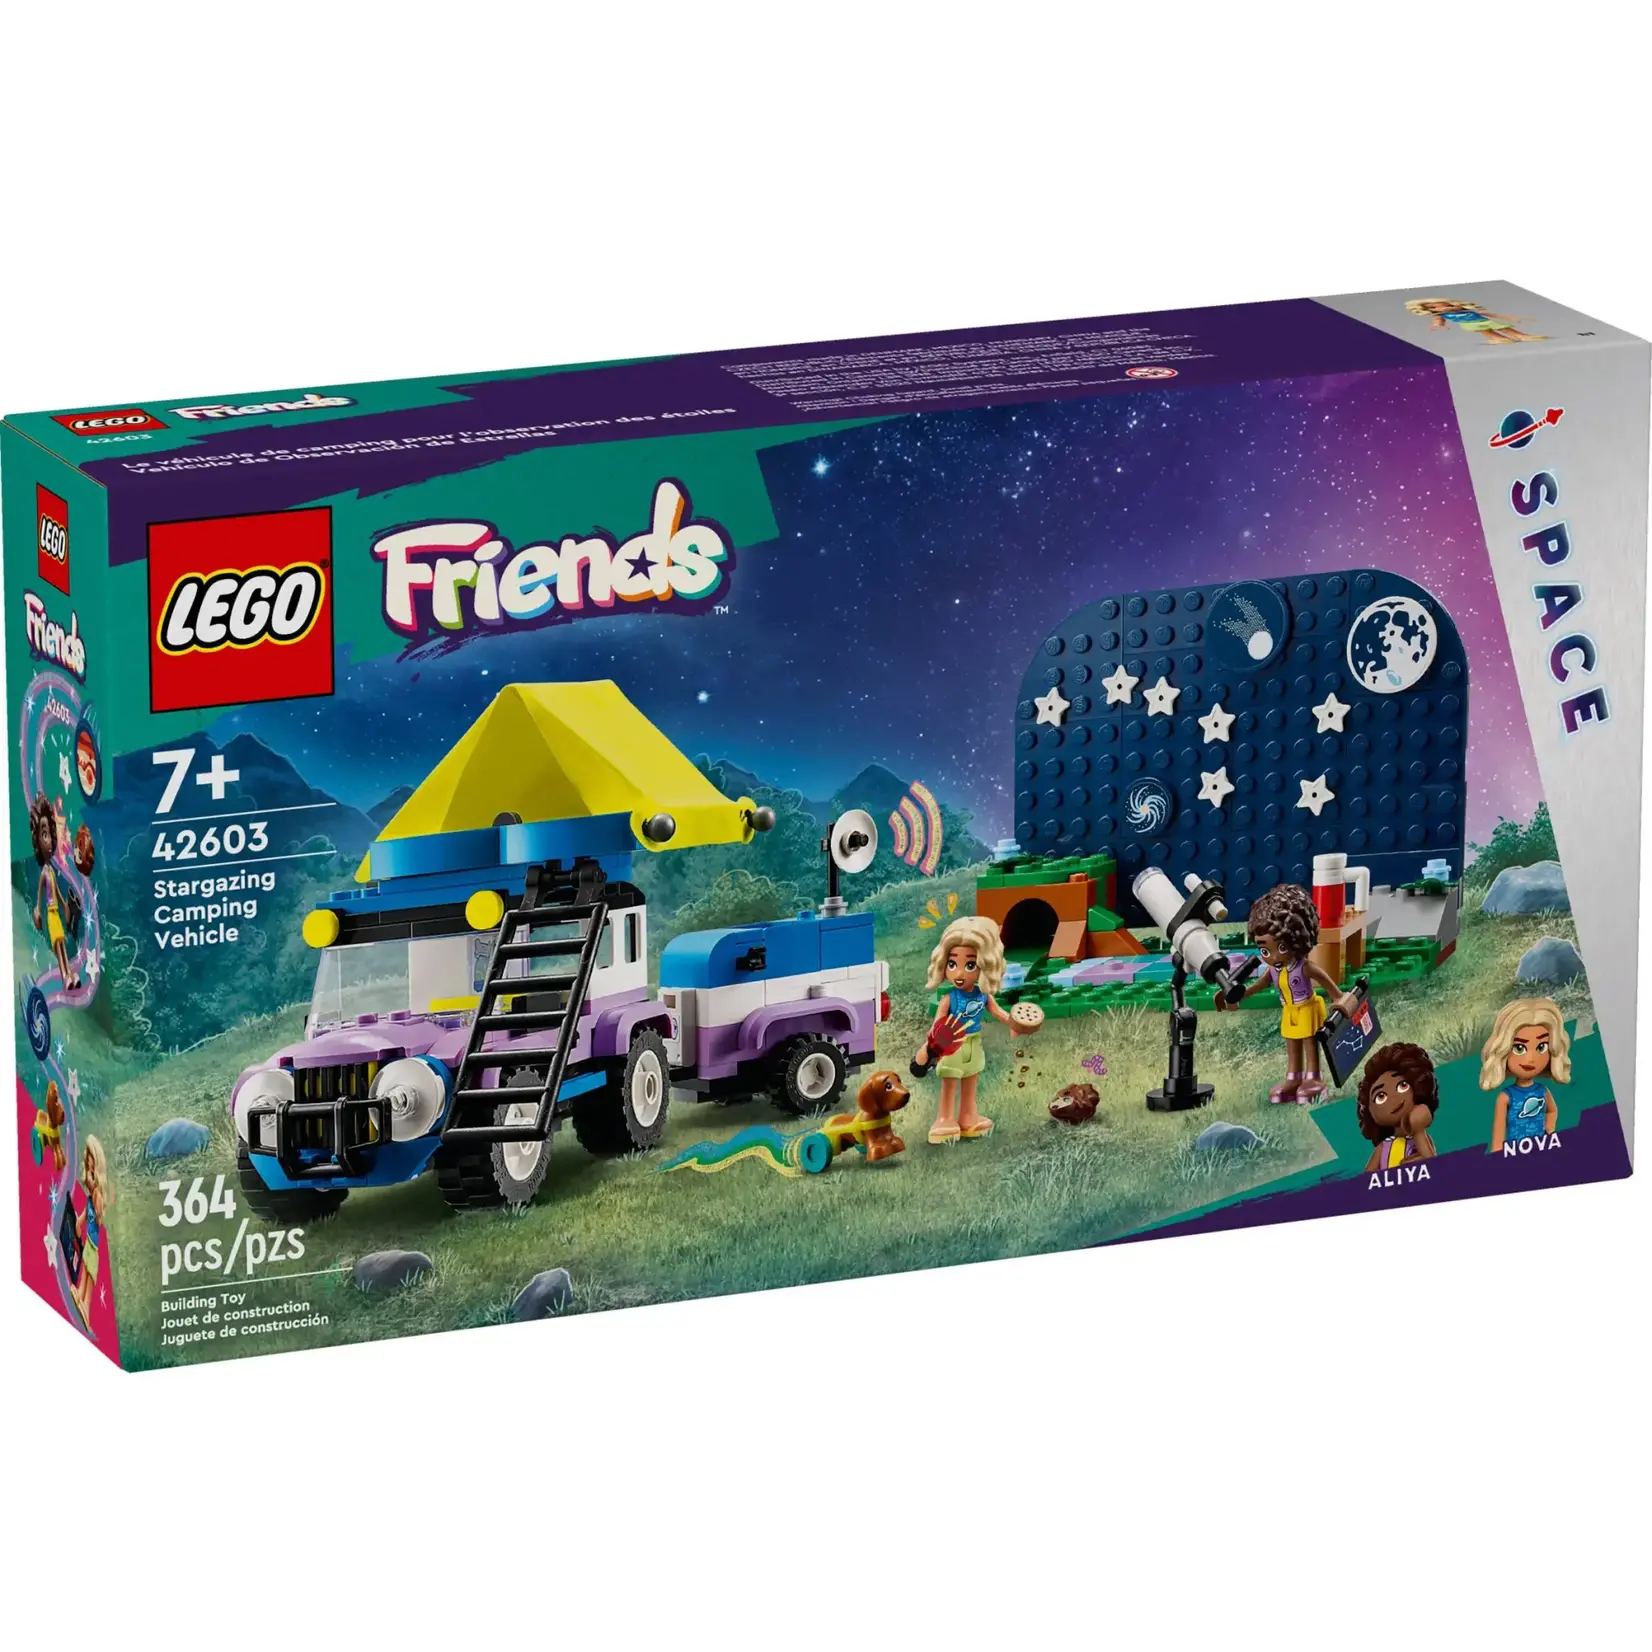 Lego Friends Stargazing Camping Vehicle